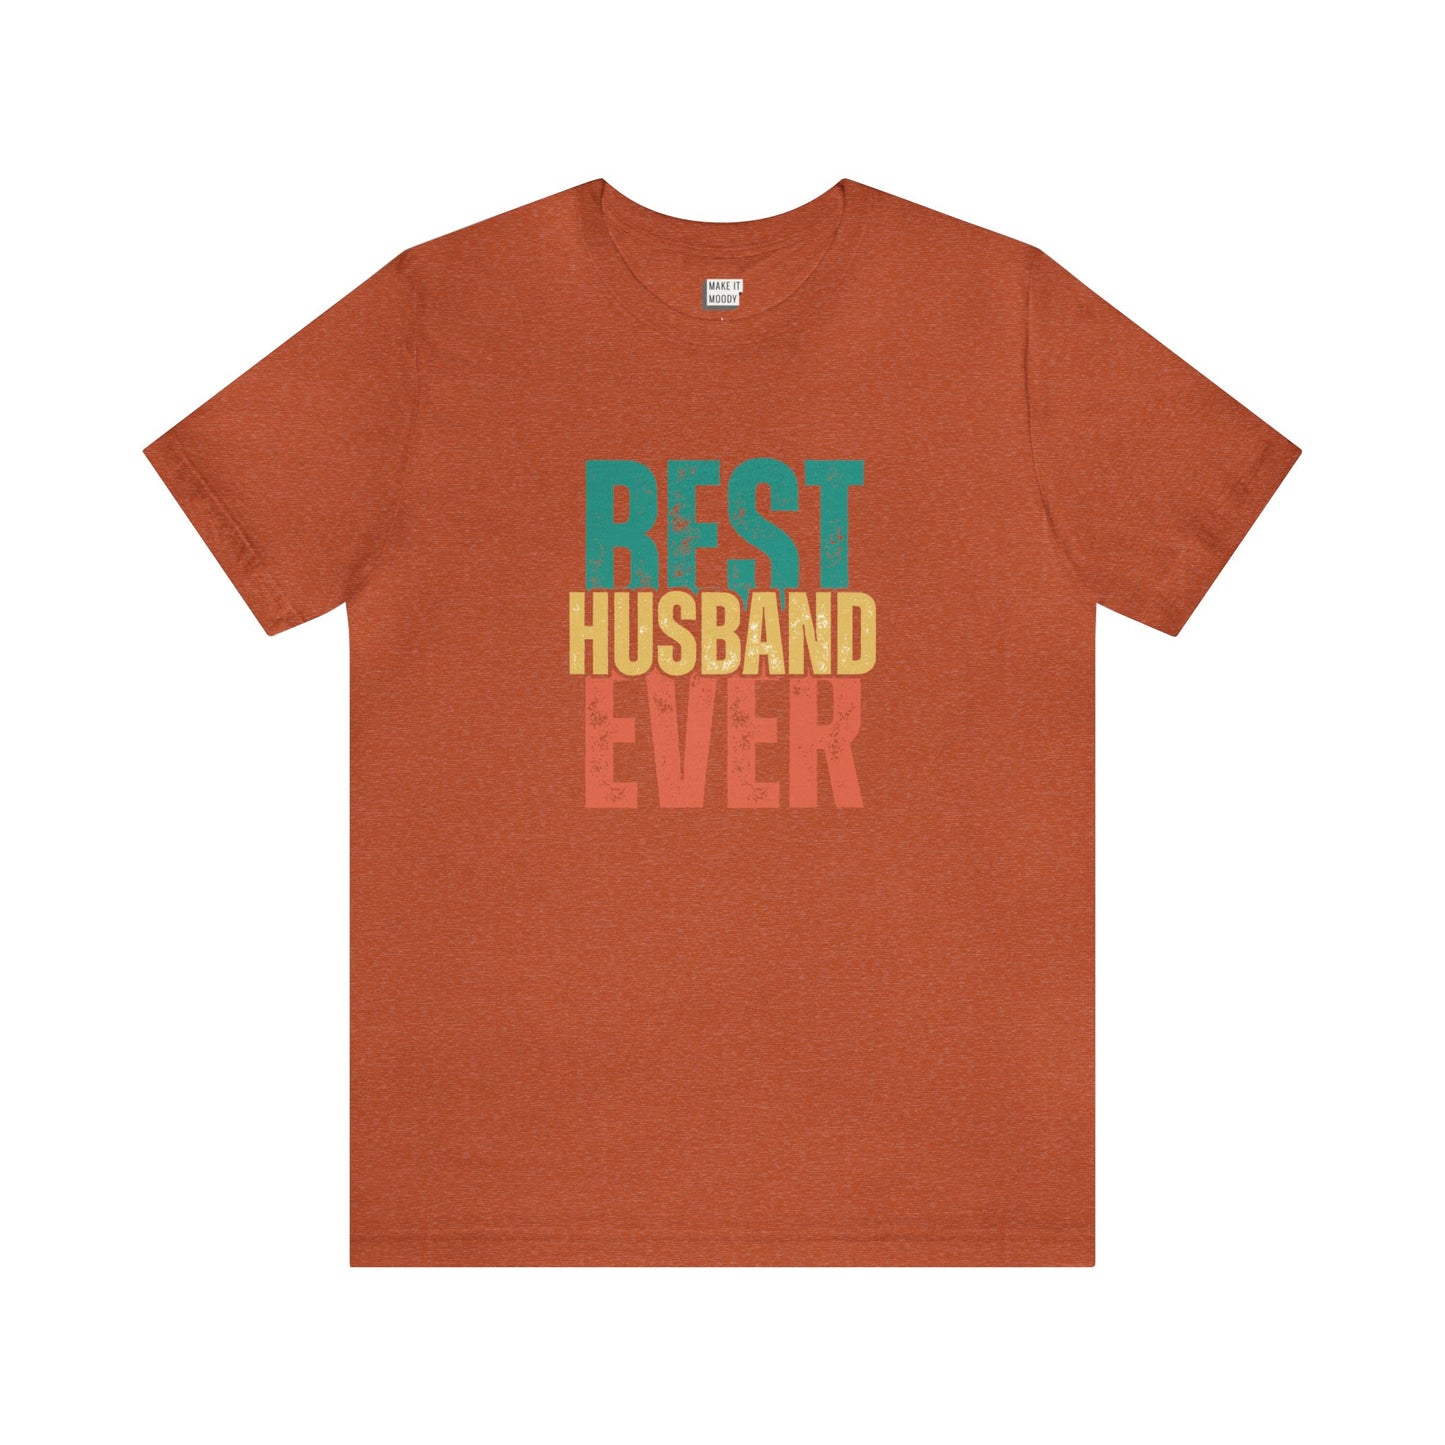 "Best Husband Ever" Tee